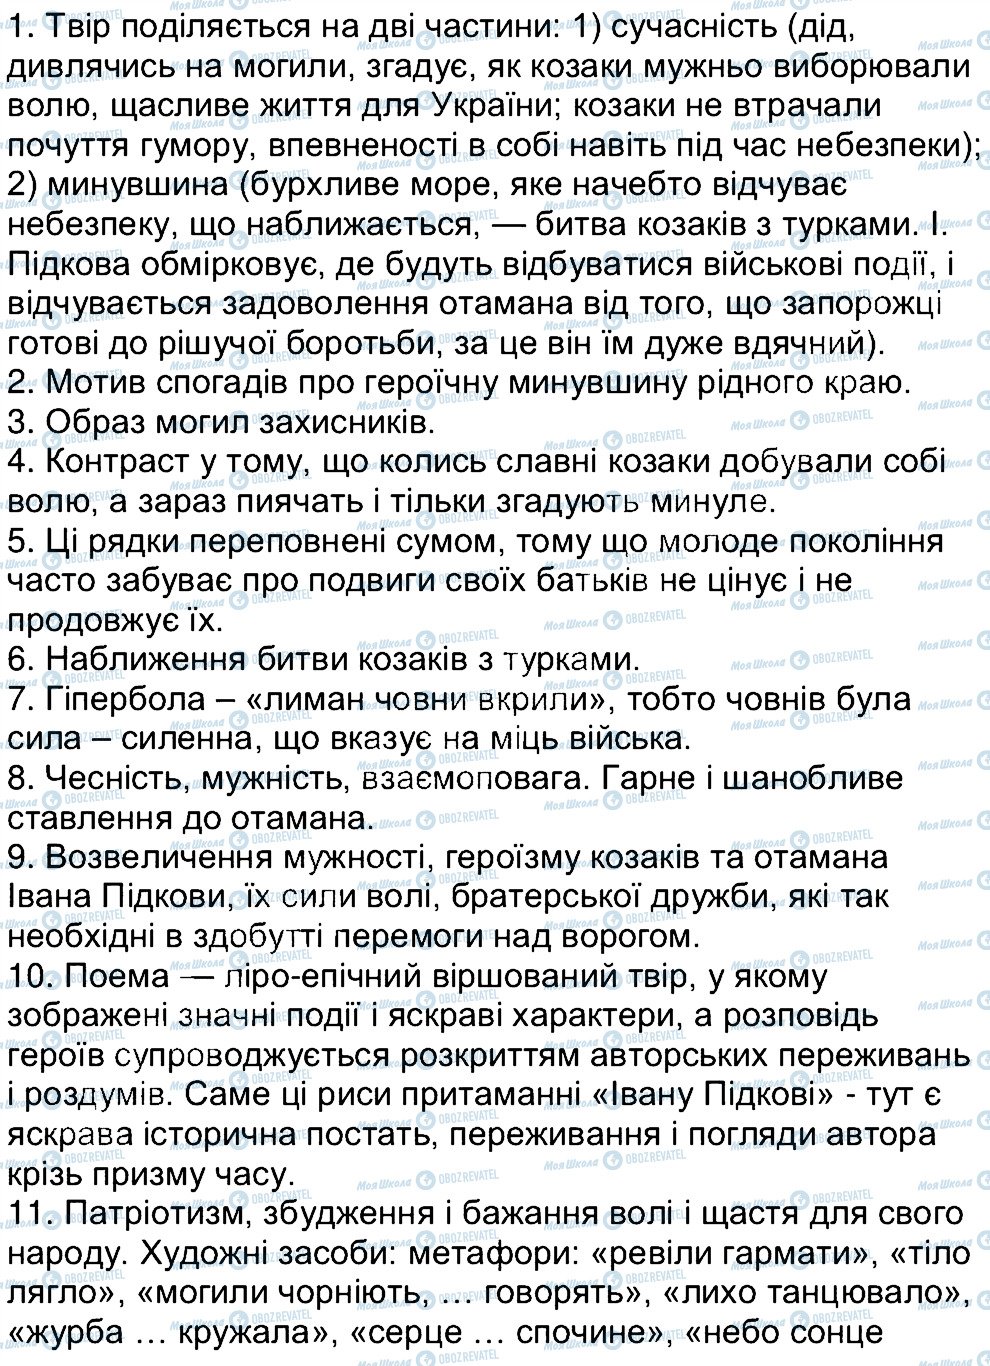 ГДЗ Українська література 6 клас сторінка 61